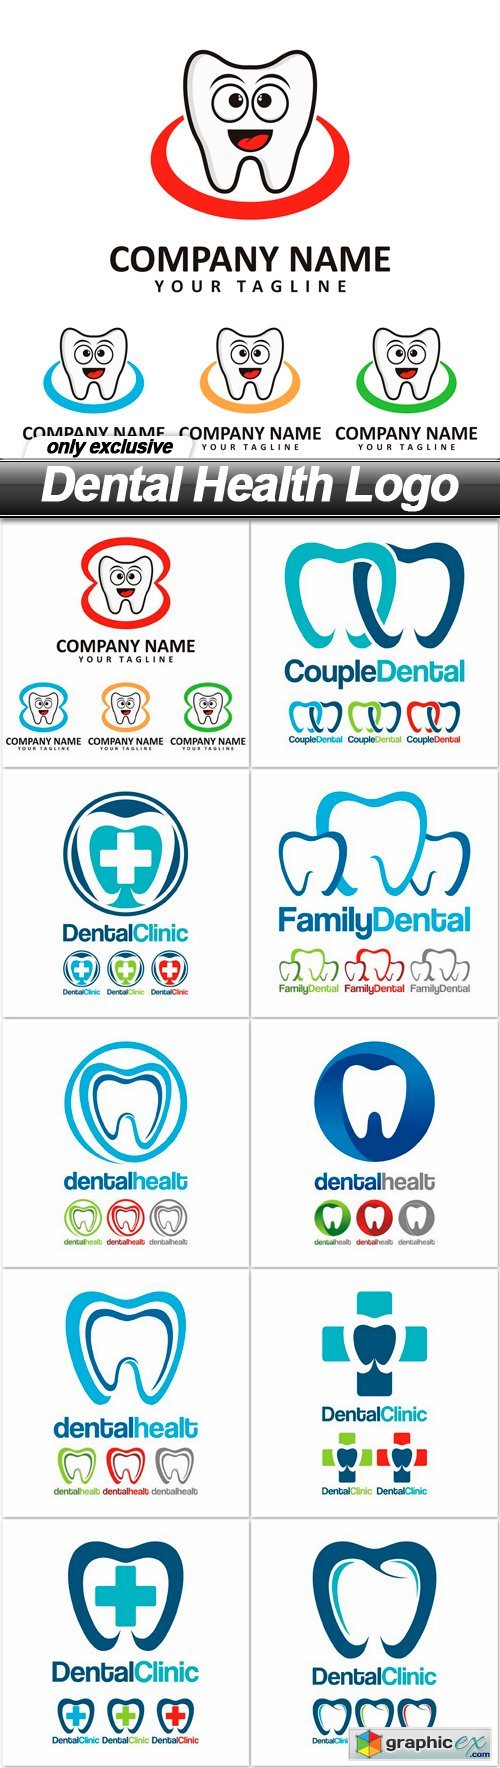 Dental Health Logo - 11 EPS